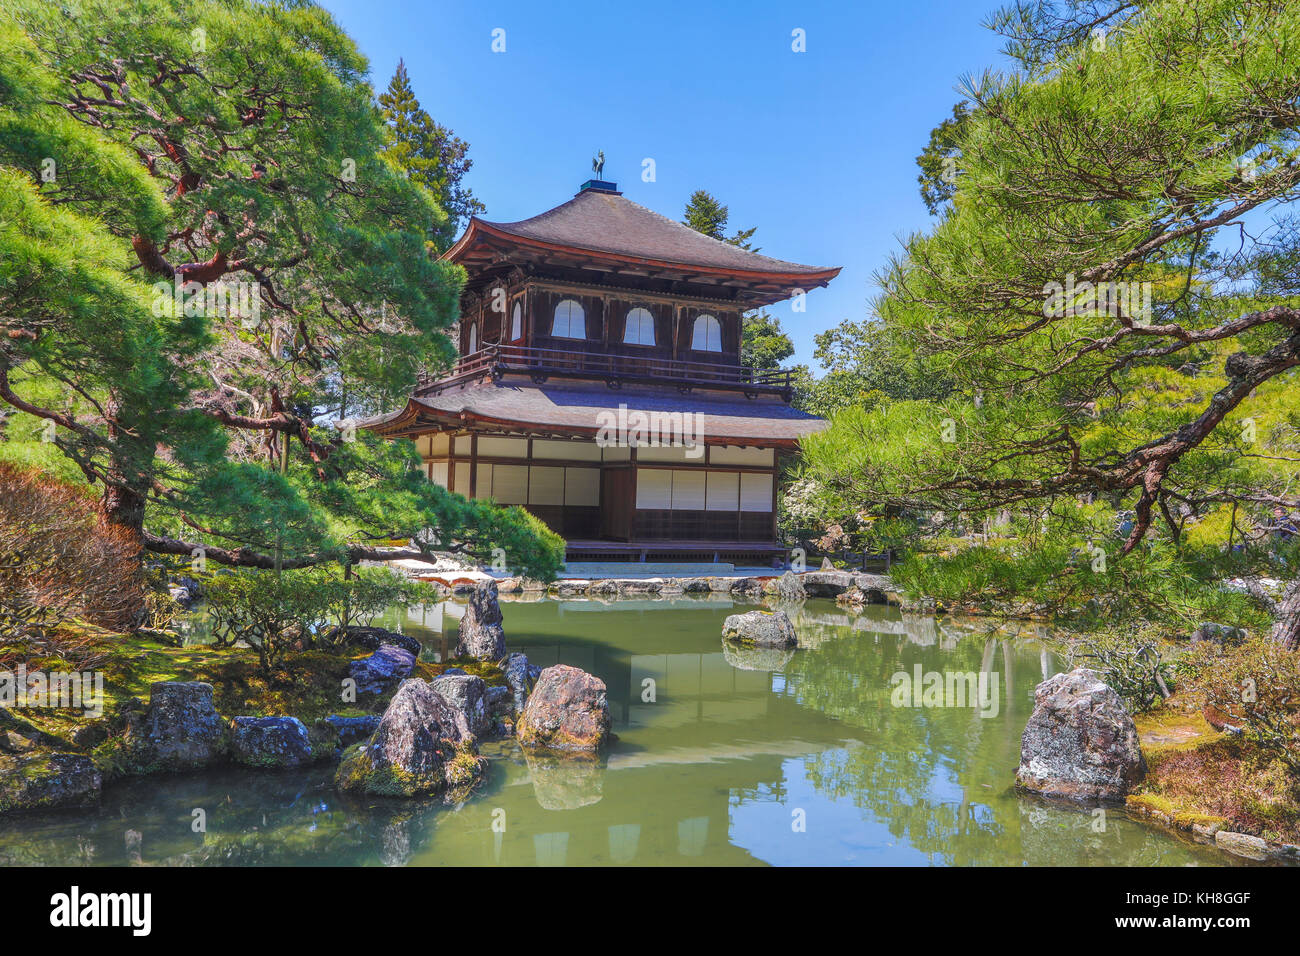 Giappone, kyoto city,ginkaku-ji pavilion.Caption locale *** Architettura, giardino, ginkakuji, Giappone, kyoto city, nessun popolo, Pavilion, stagno, argento pavi Foto Stock